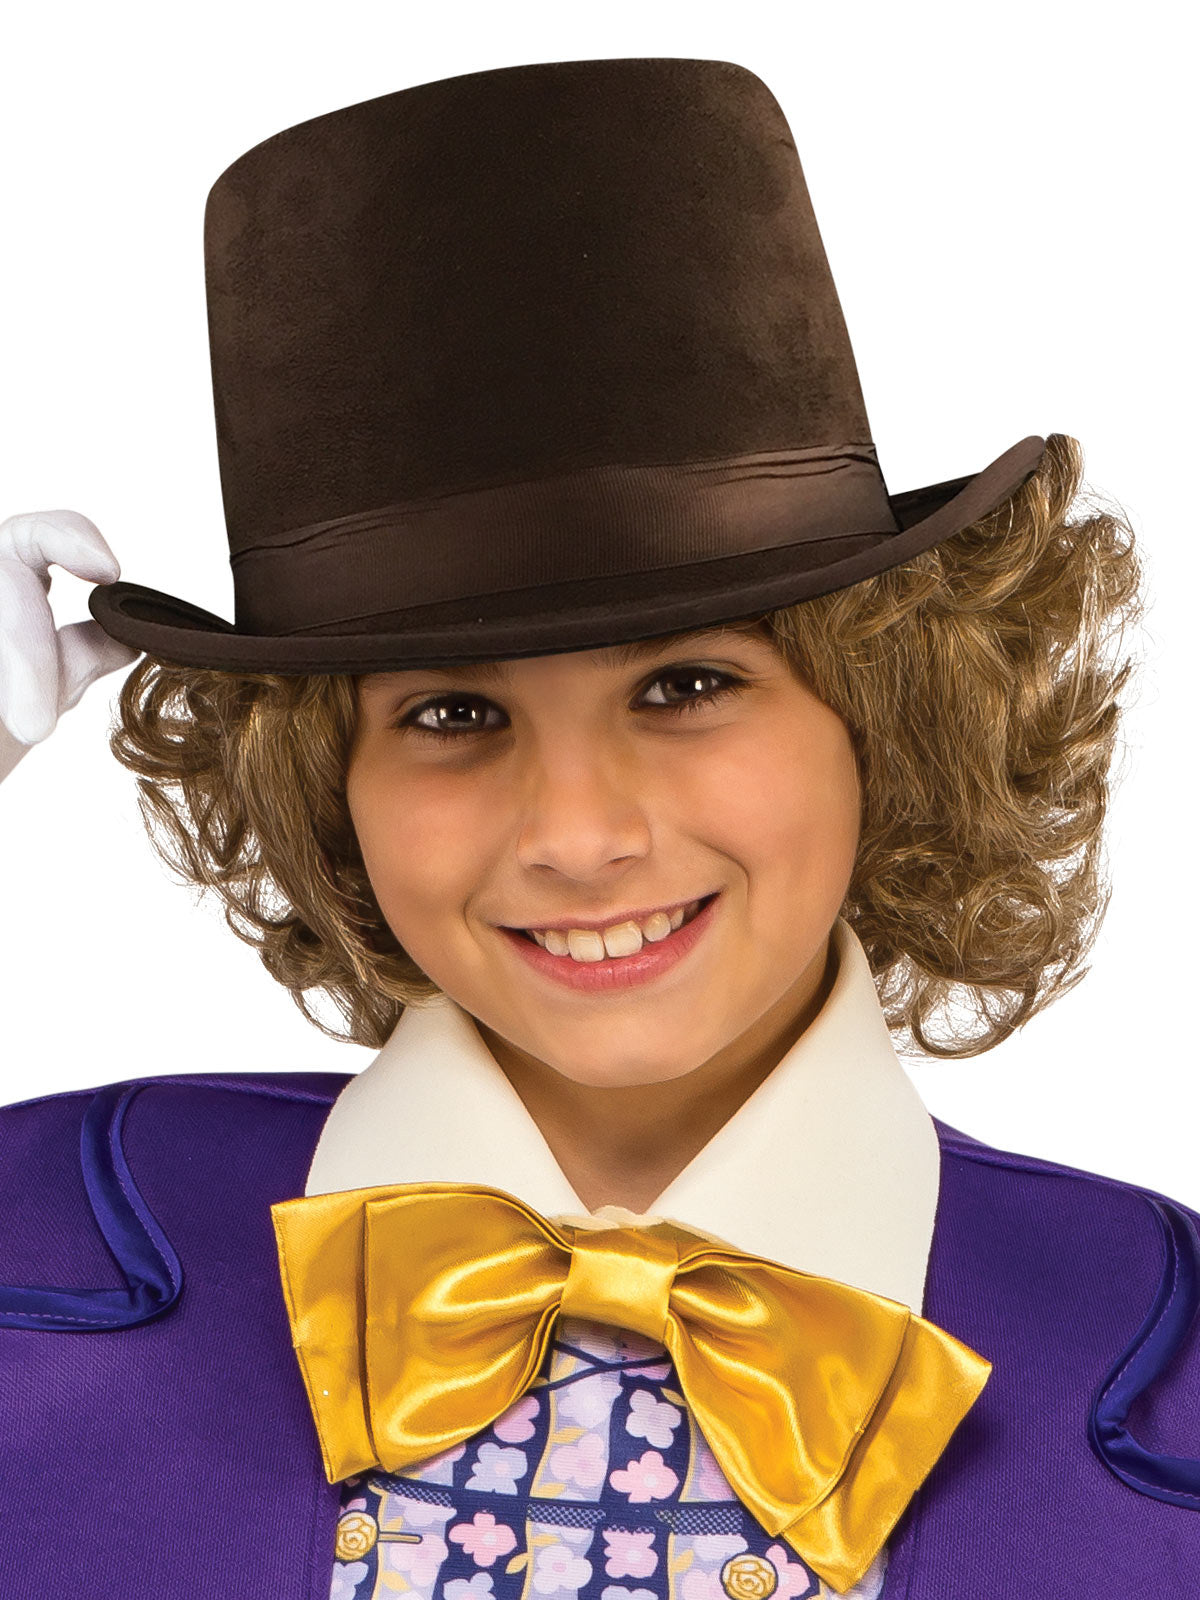  Rubie's Kids Willy Wonka, The Chocolate Factory Willy